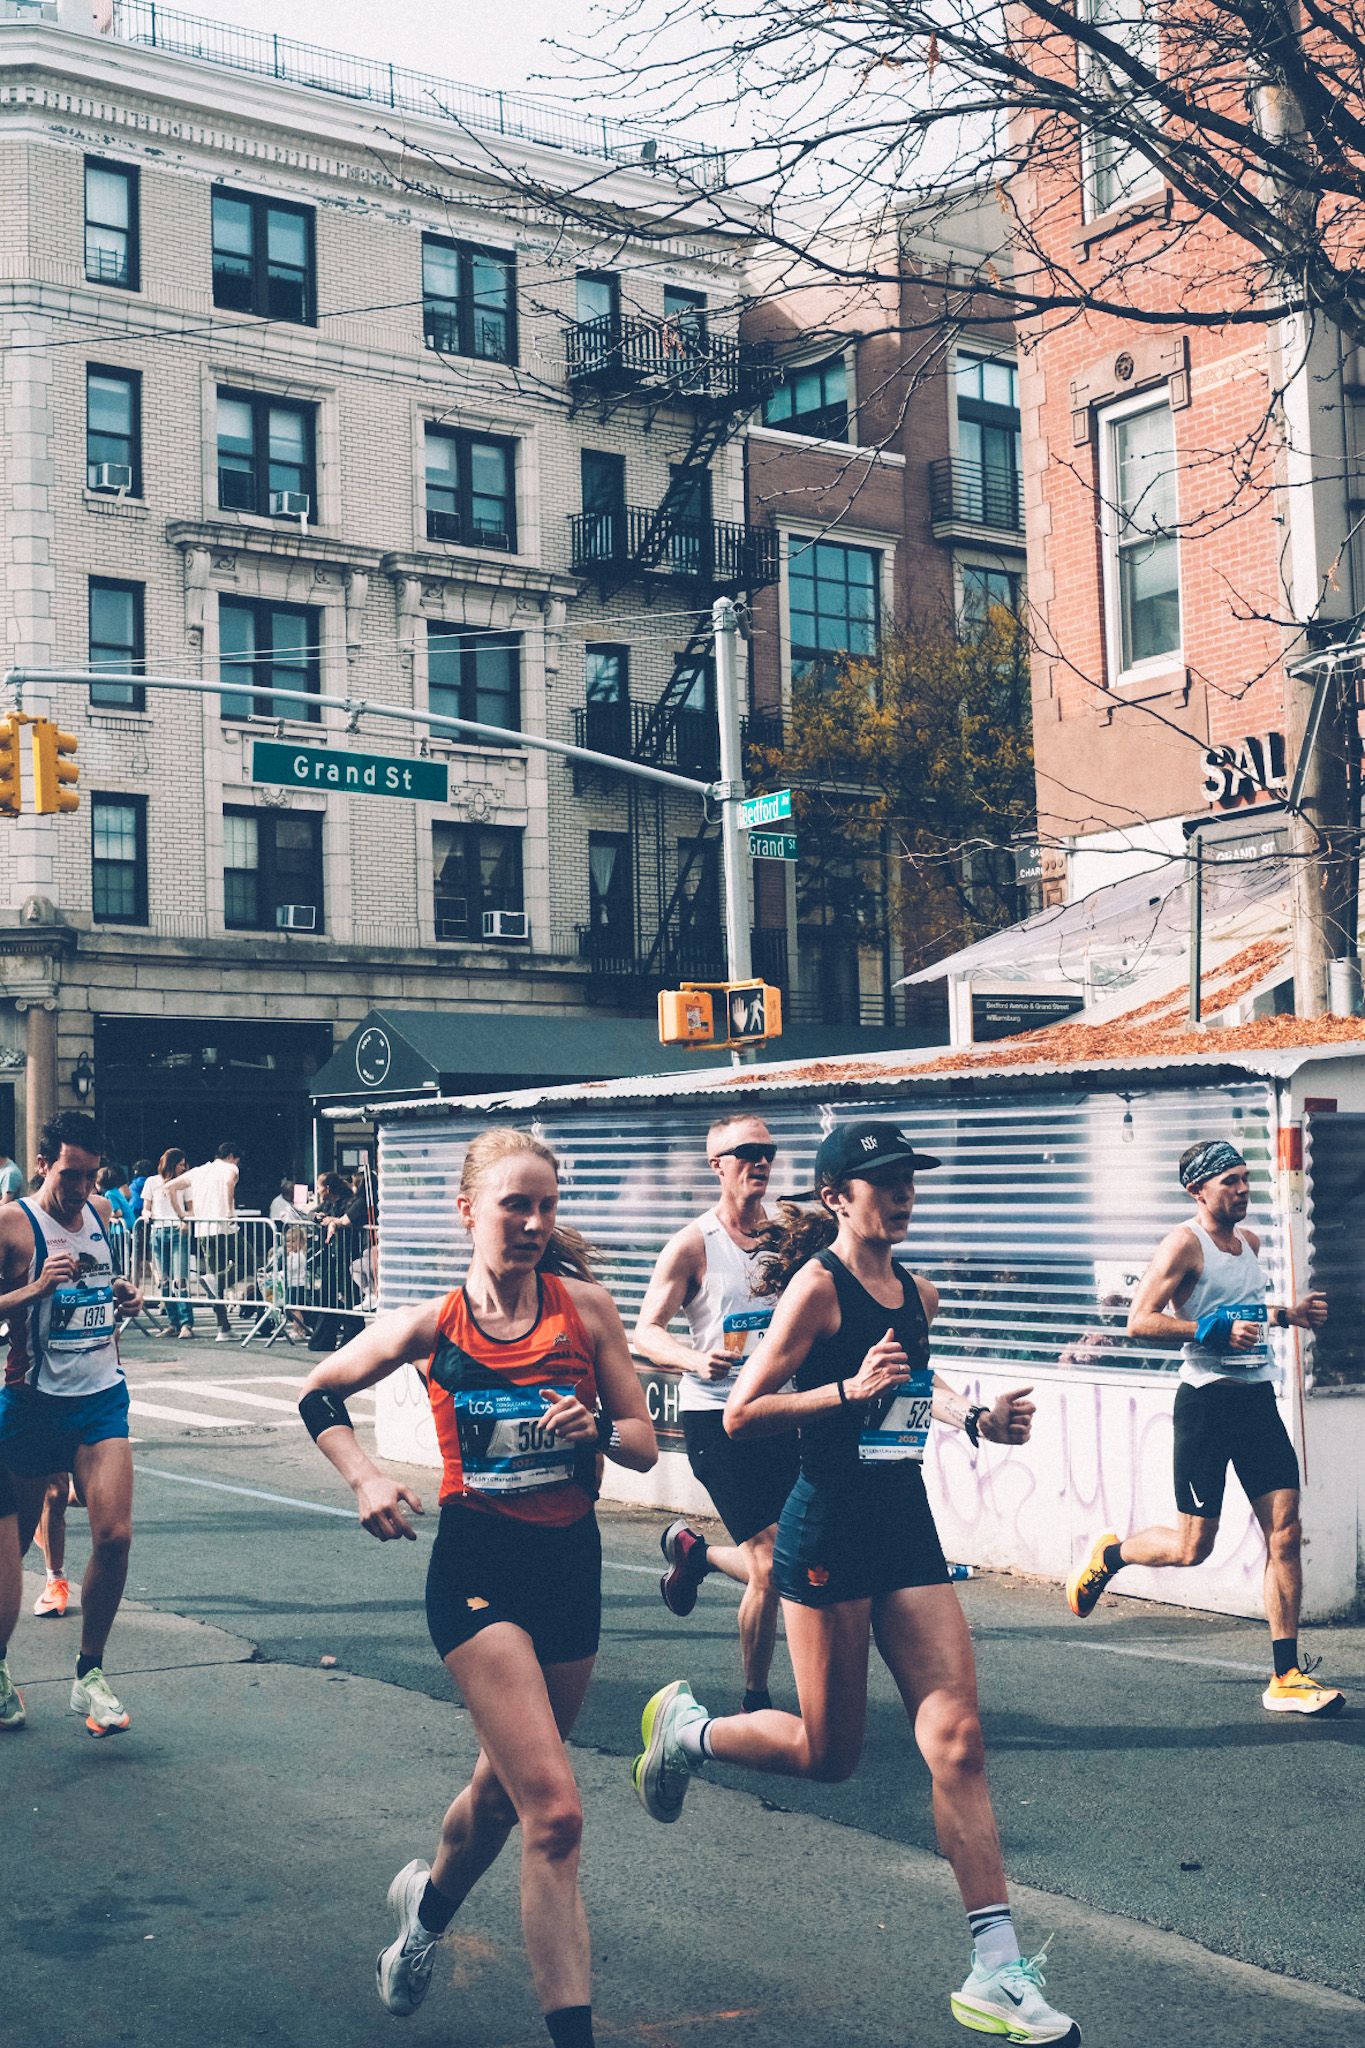 New York marathon runners run past on a city street.